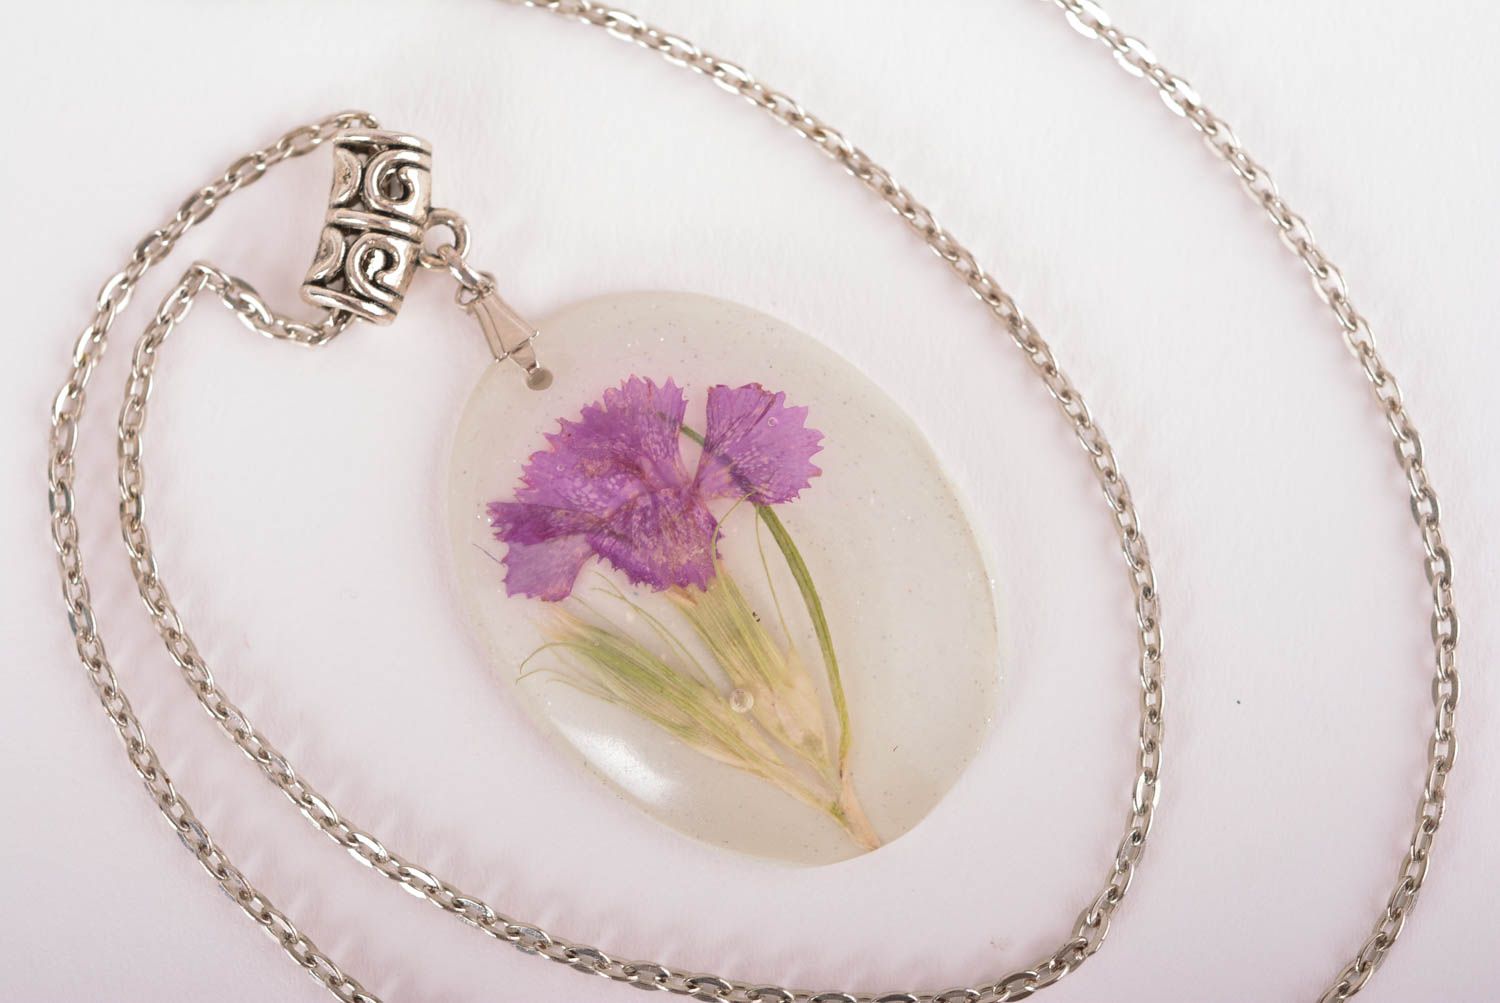 Stylish handmade neck pendant with real flowers unusual epoxy pendant gift ideas photo 2